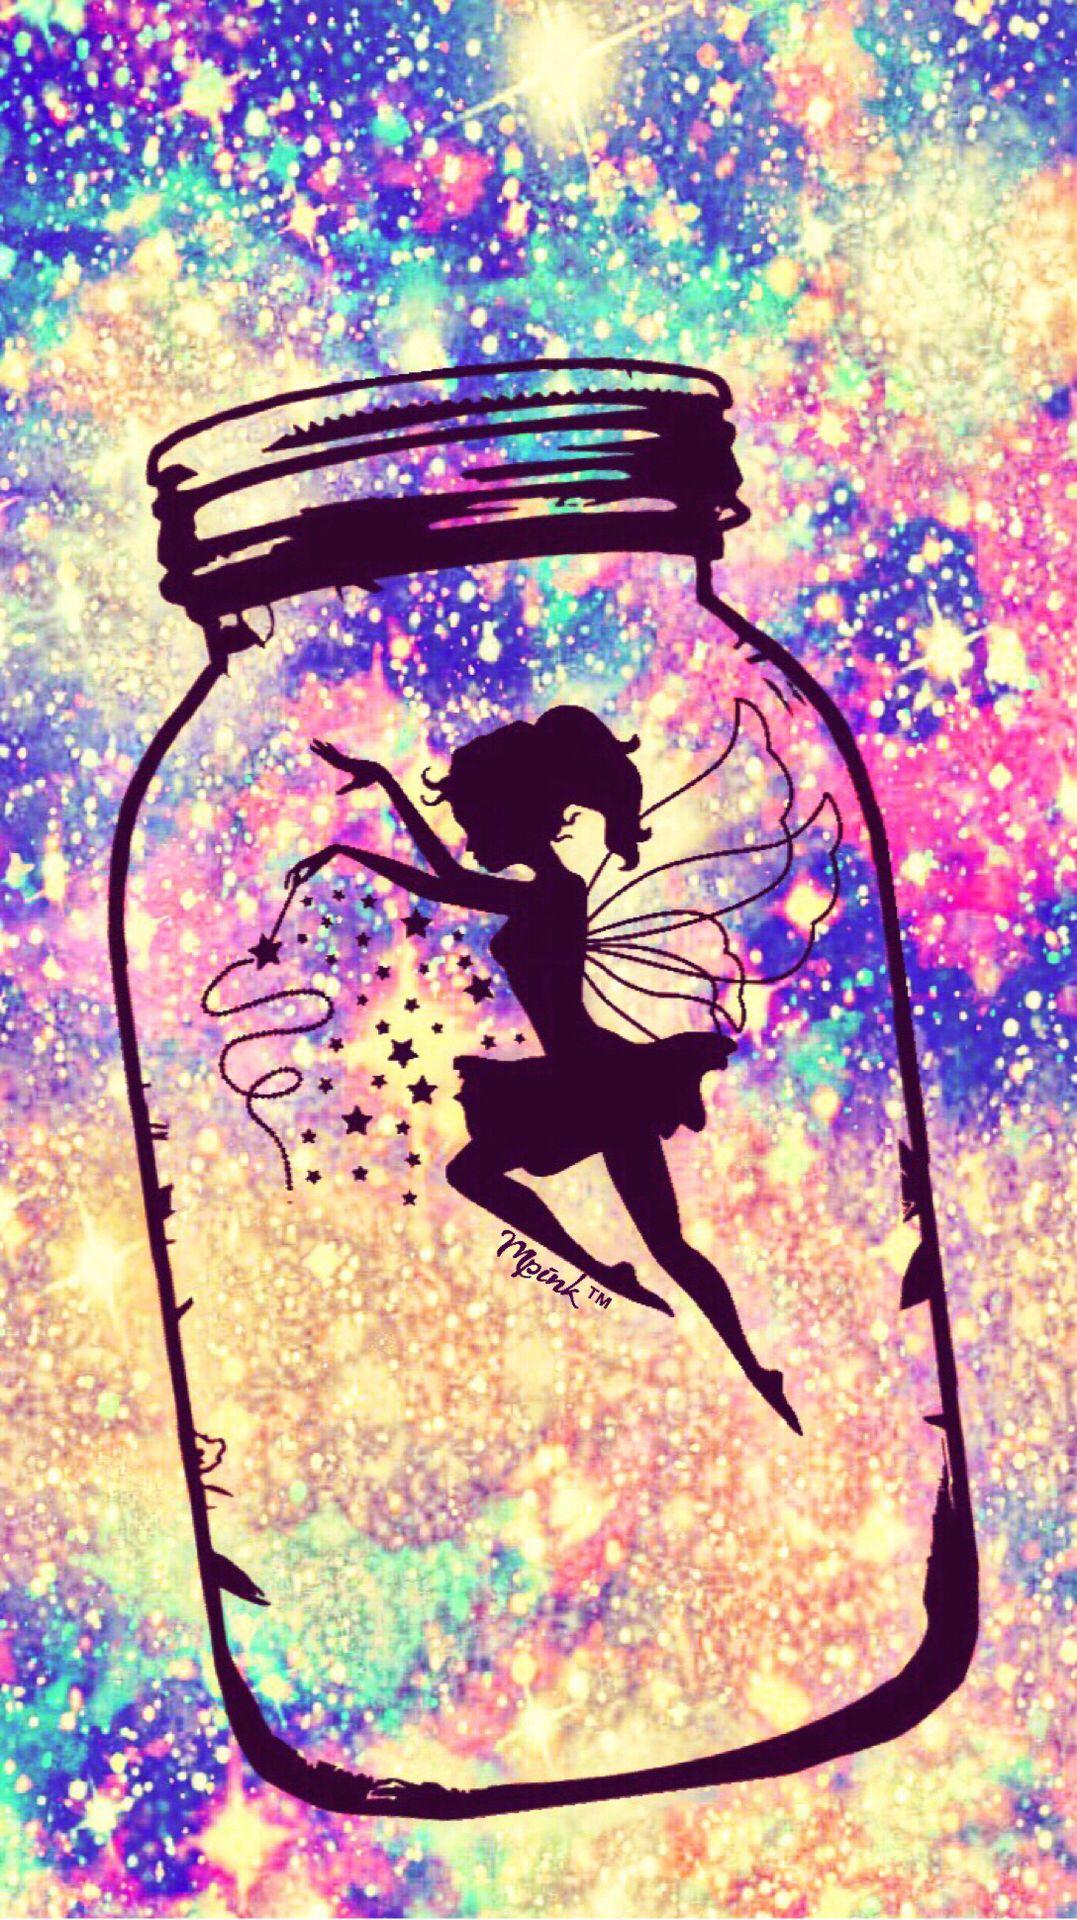 Fairy In A Jar Galaxy Wallpaper #androidwallpaper #iphonewallpaper